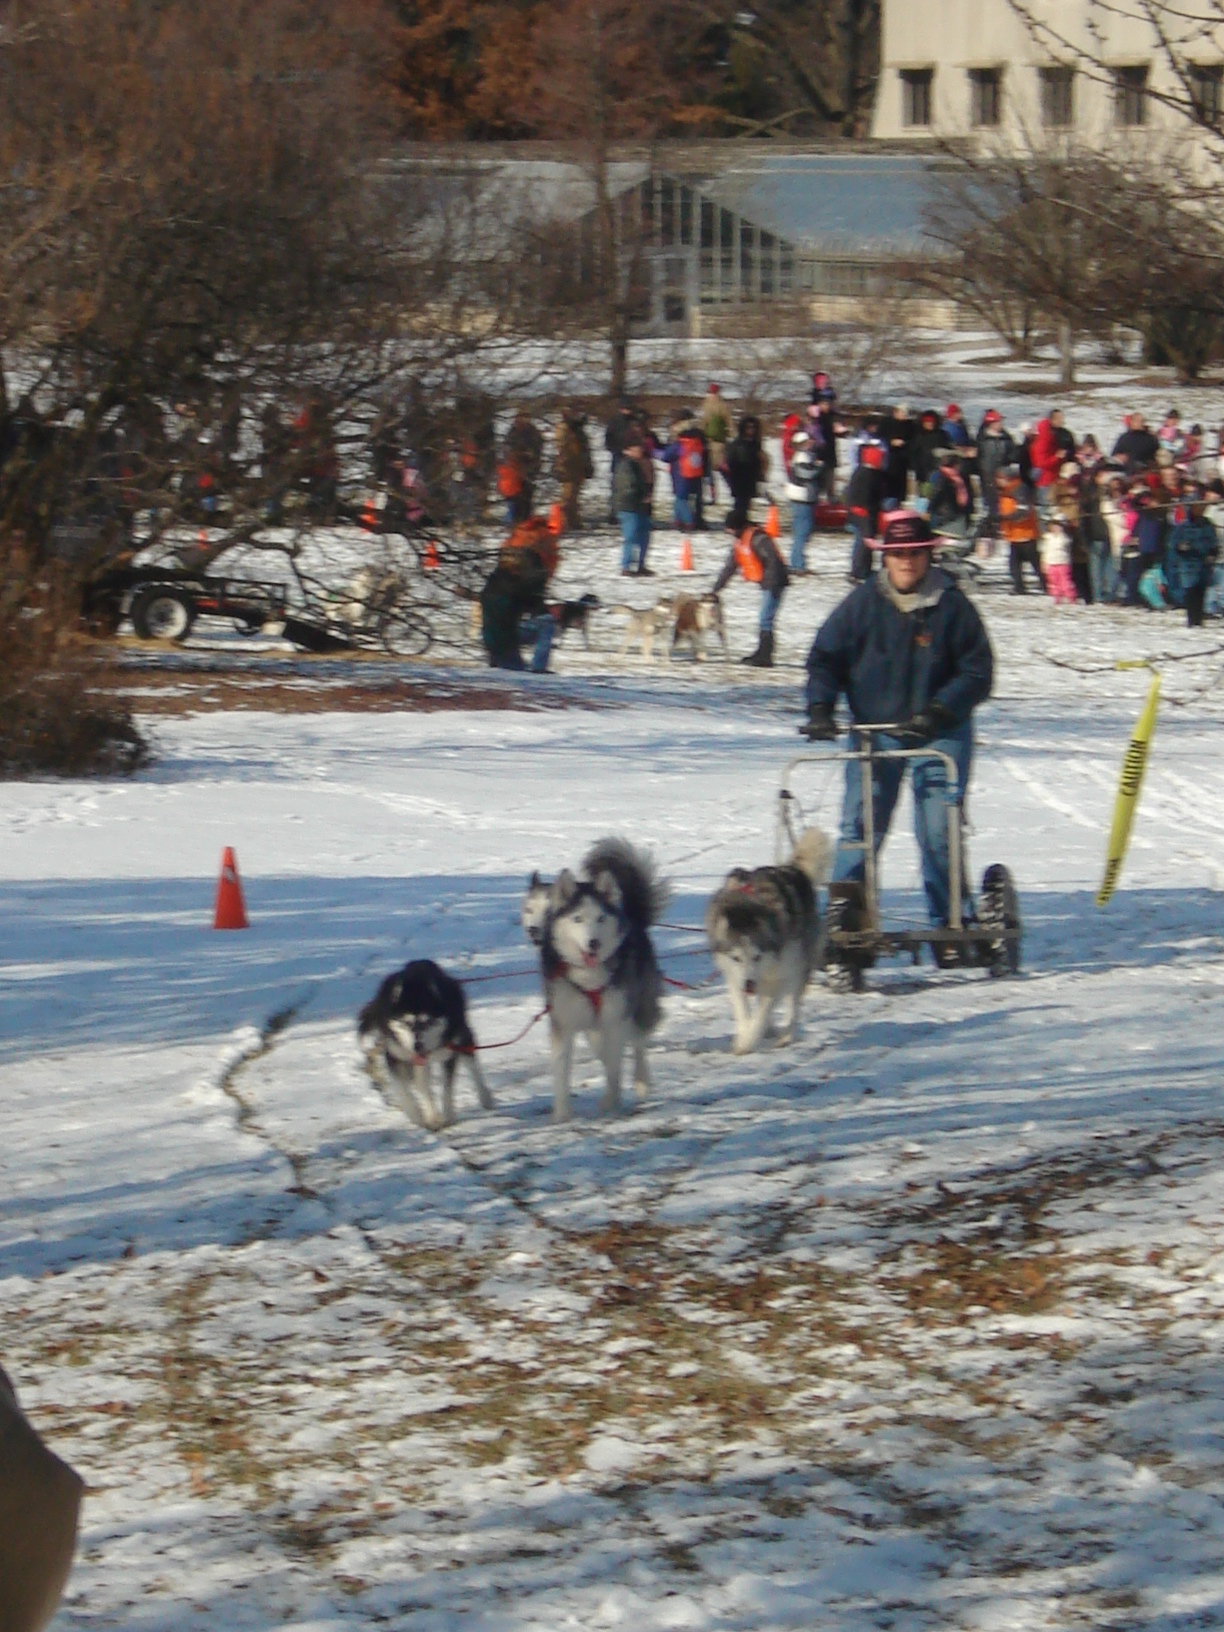 Hitchin’ Up the Huskies at Morton Arboretum Sunday! – TheRoadScholar